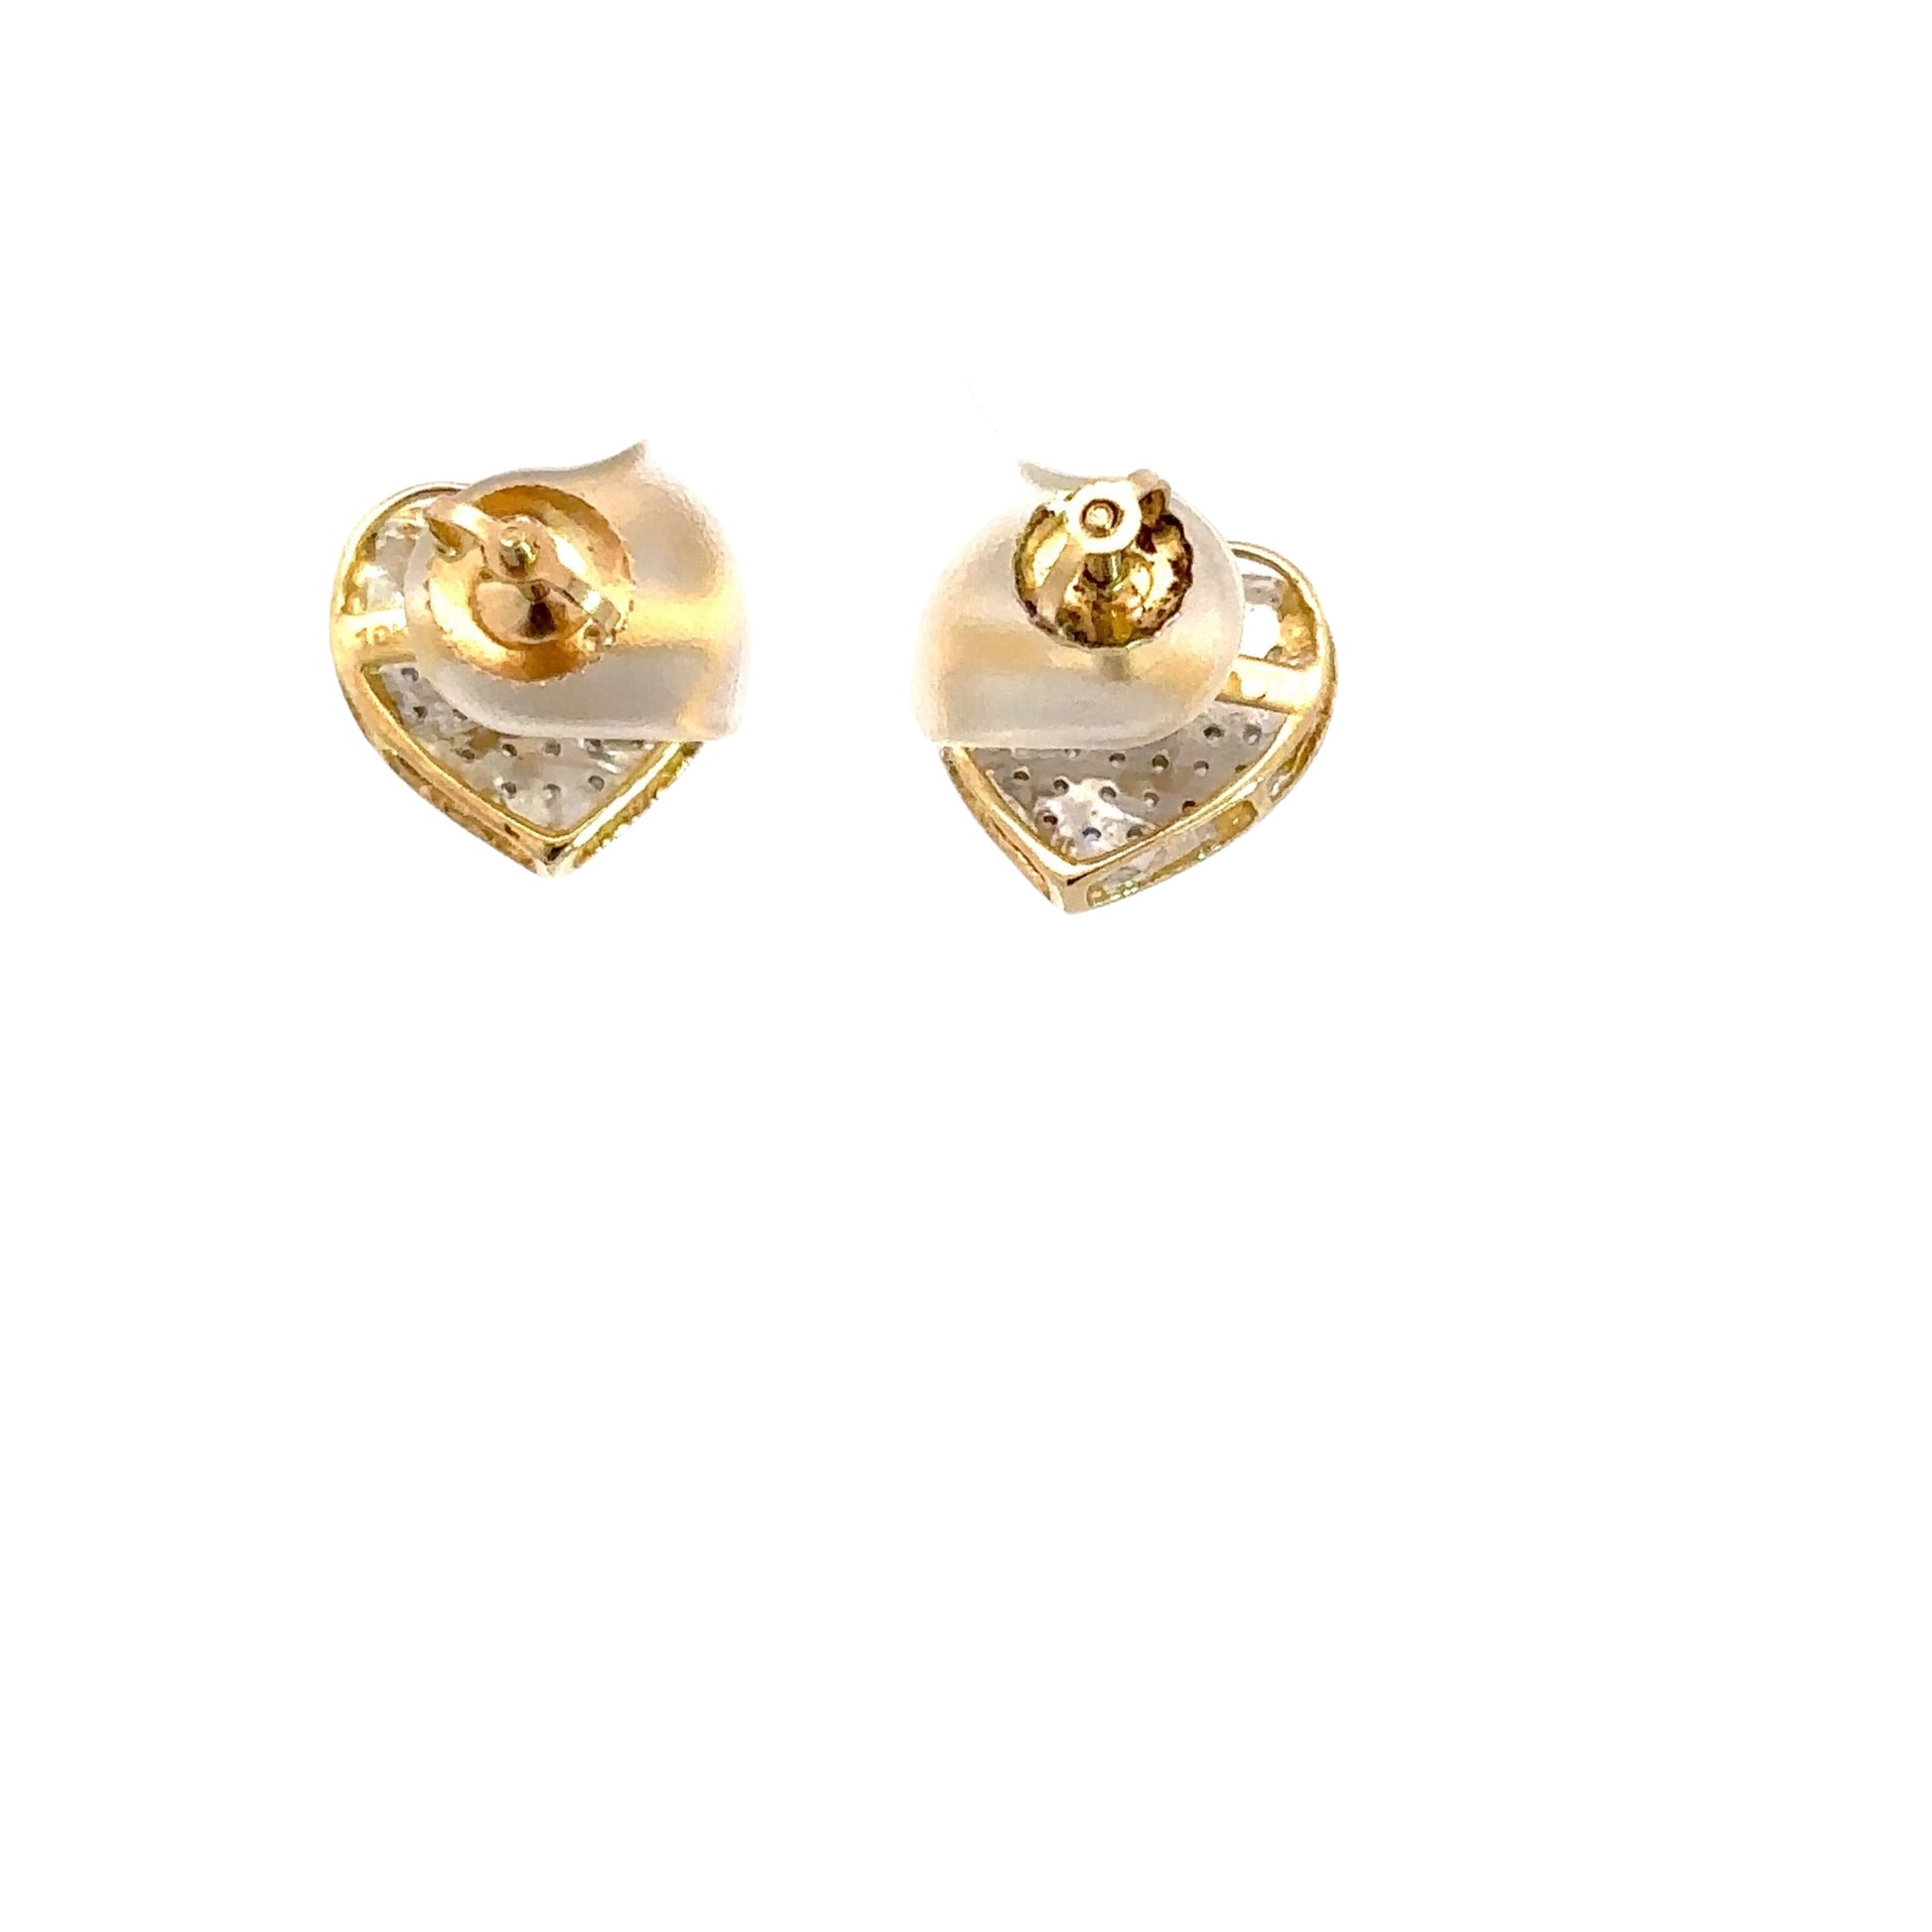 Back of diamond heart earrings showing screwbacks and white gold inside